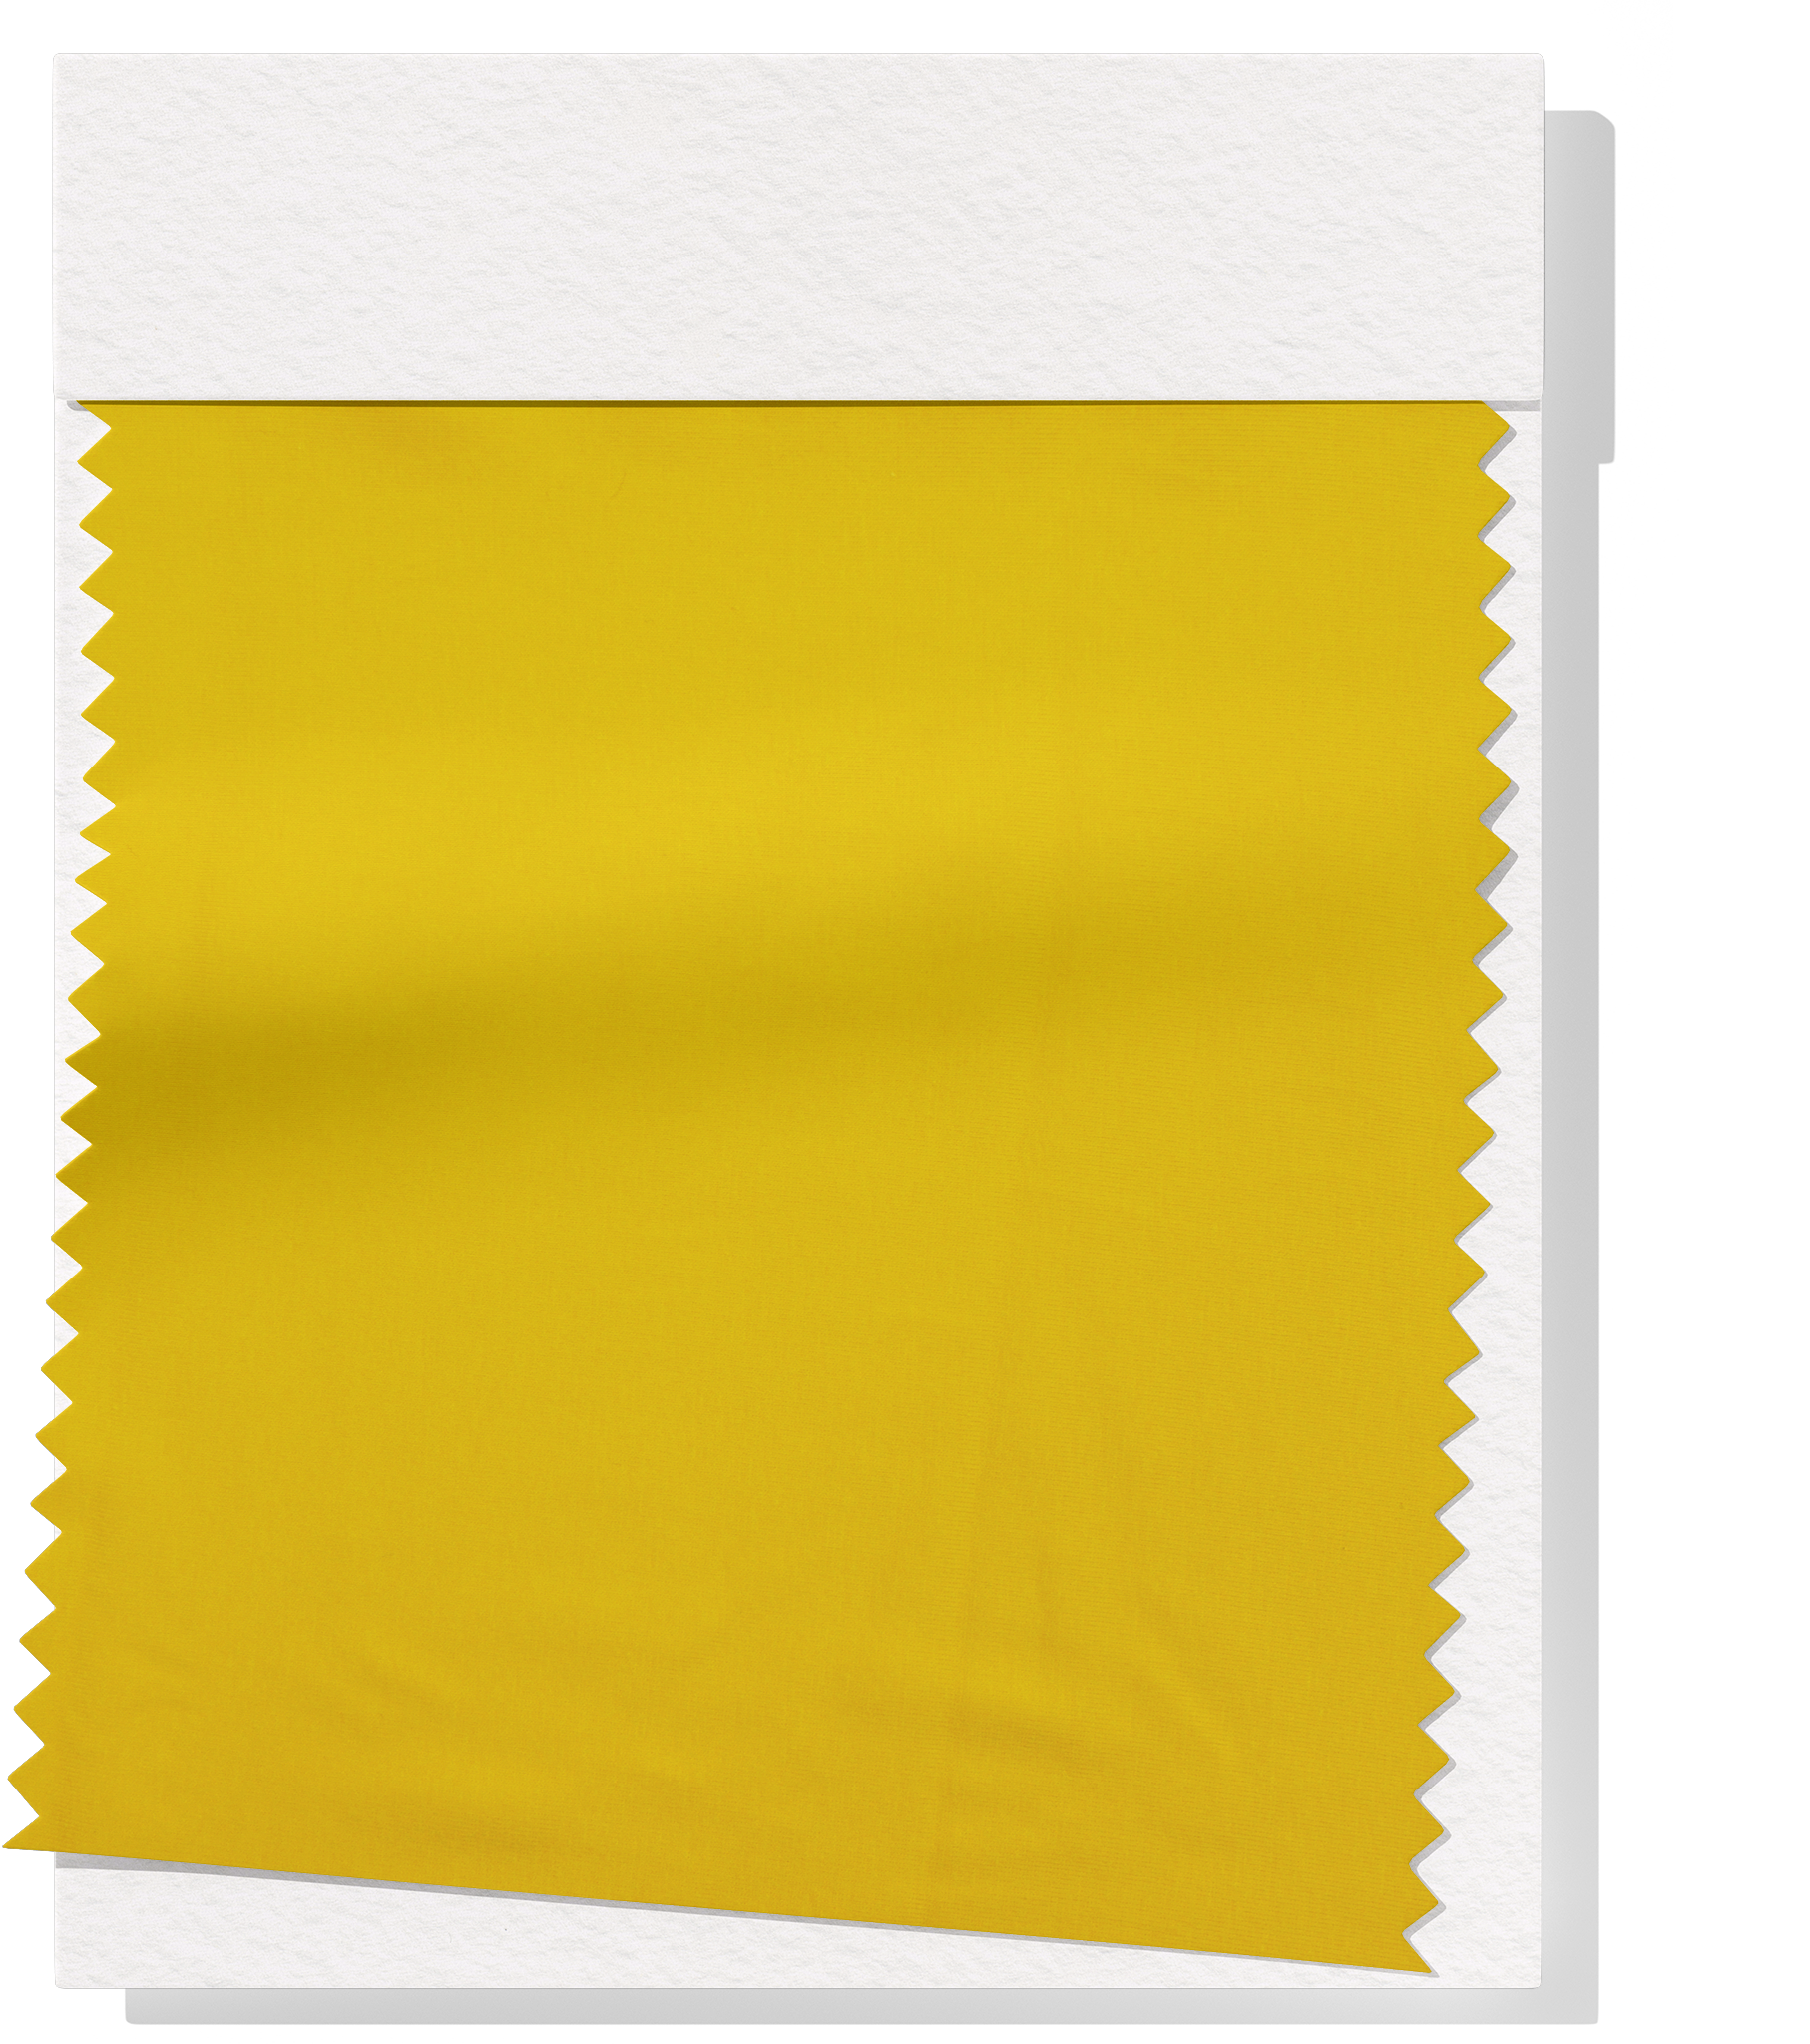 Cotton / Lycra T-shirting $16.00p/m - Yellow